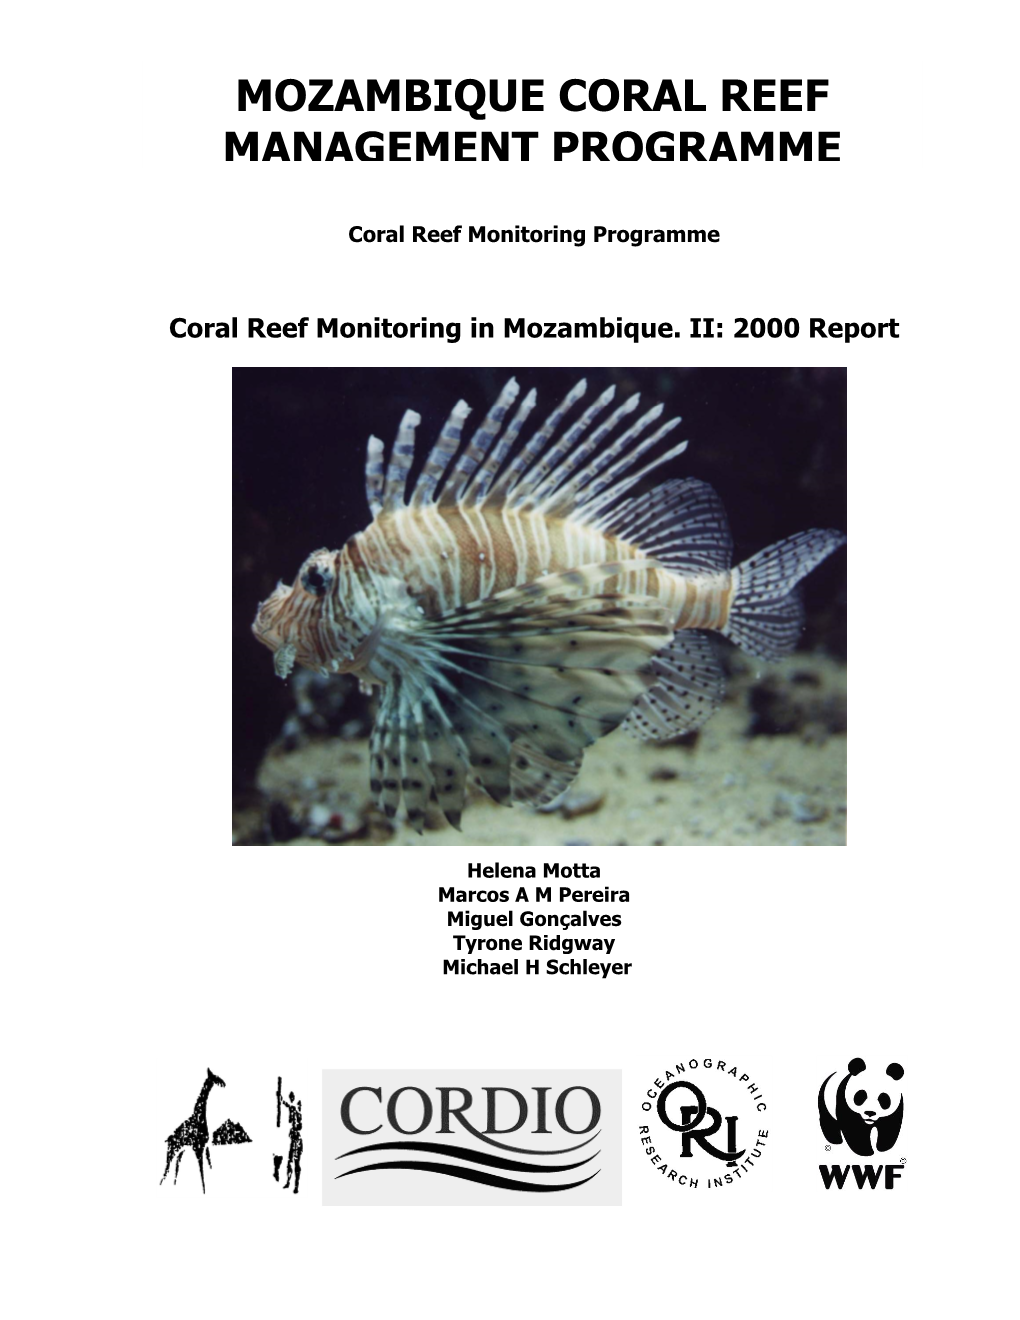 Mozambique Coral Reef Management Programme